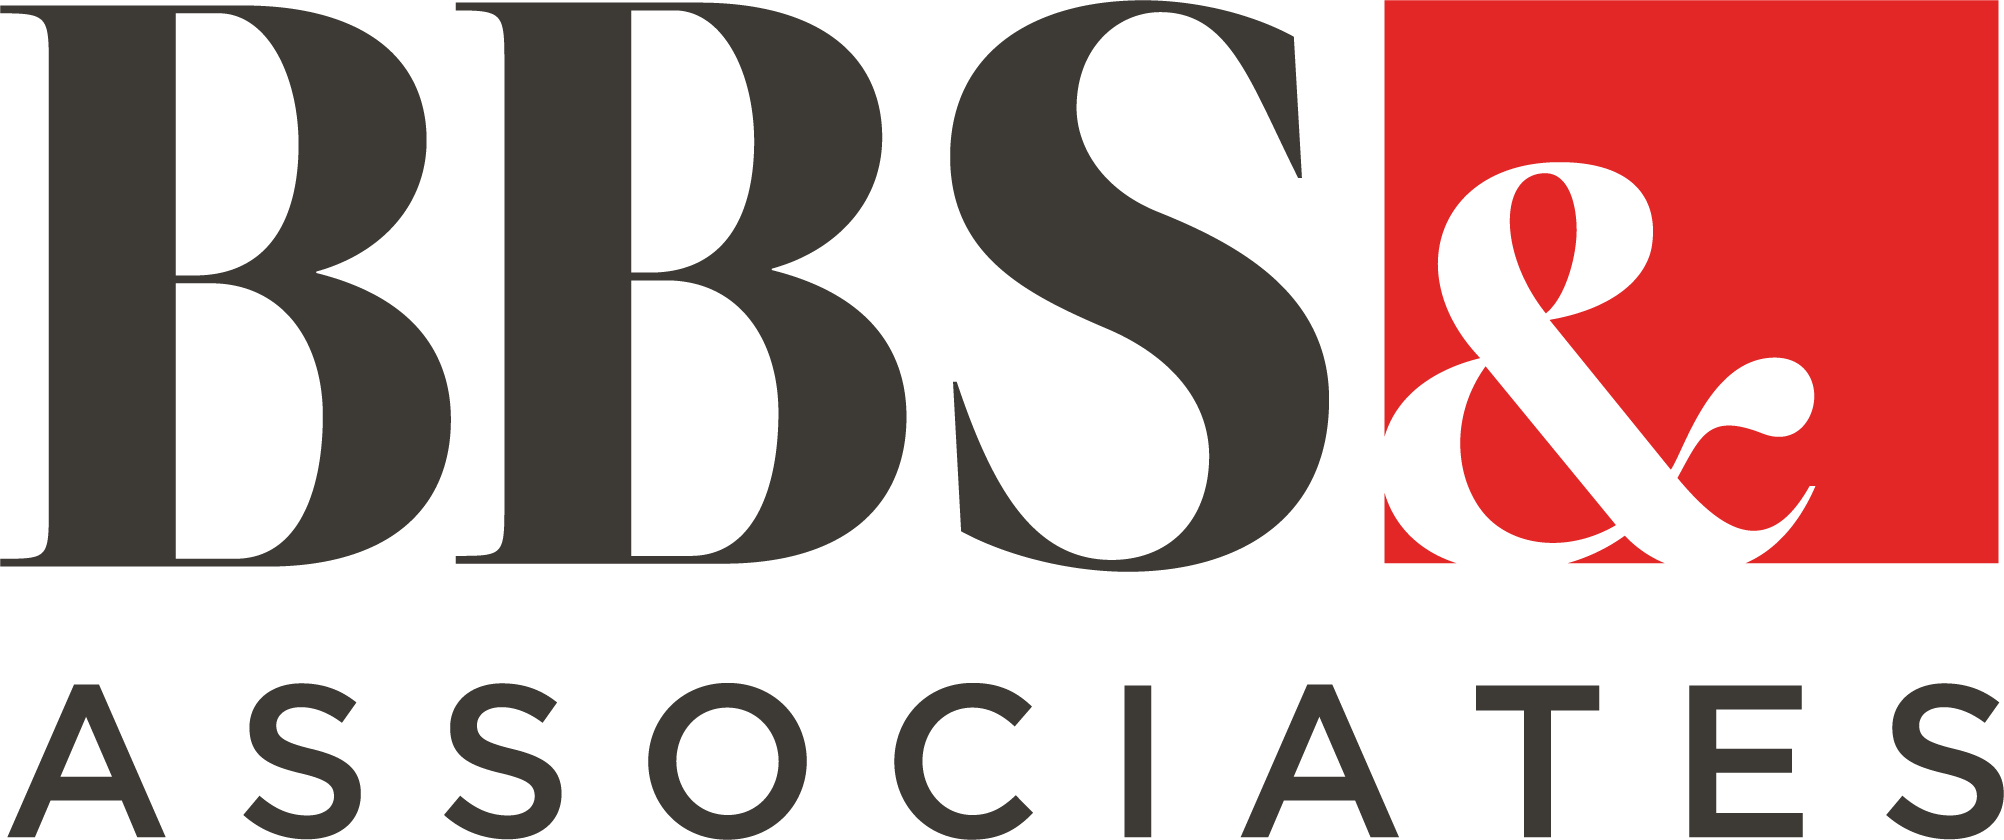 BBS Logo - Contact Us